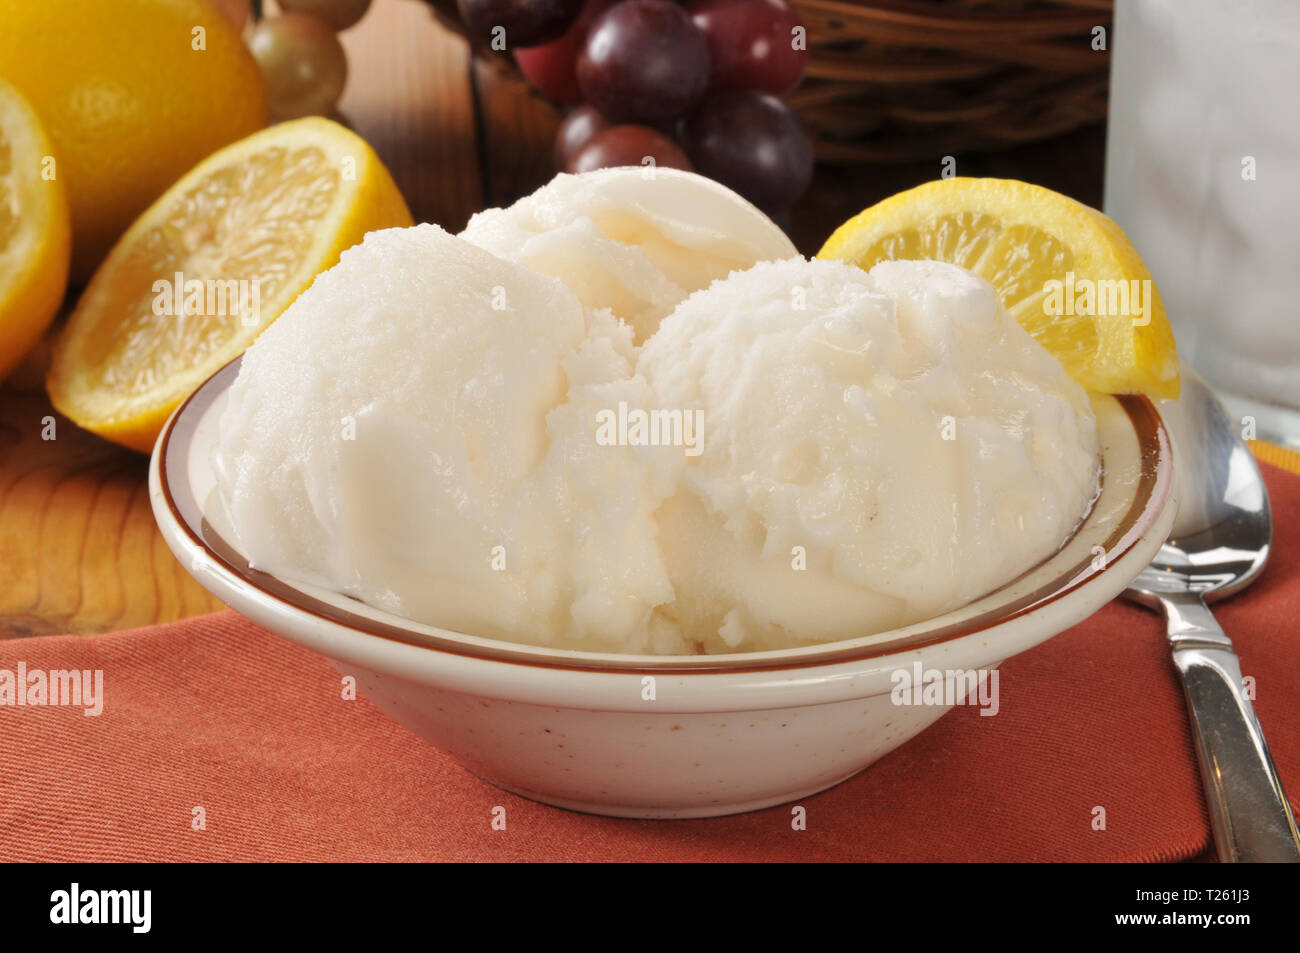 A bowl of lemon sherbet or gelato near a basket of grapes Stock Photo